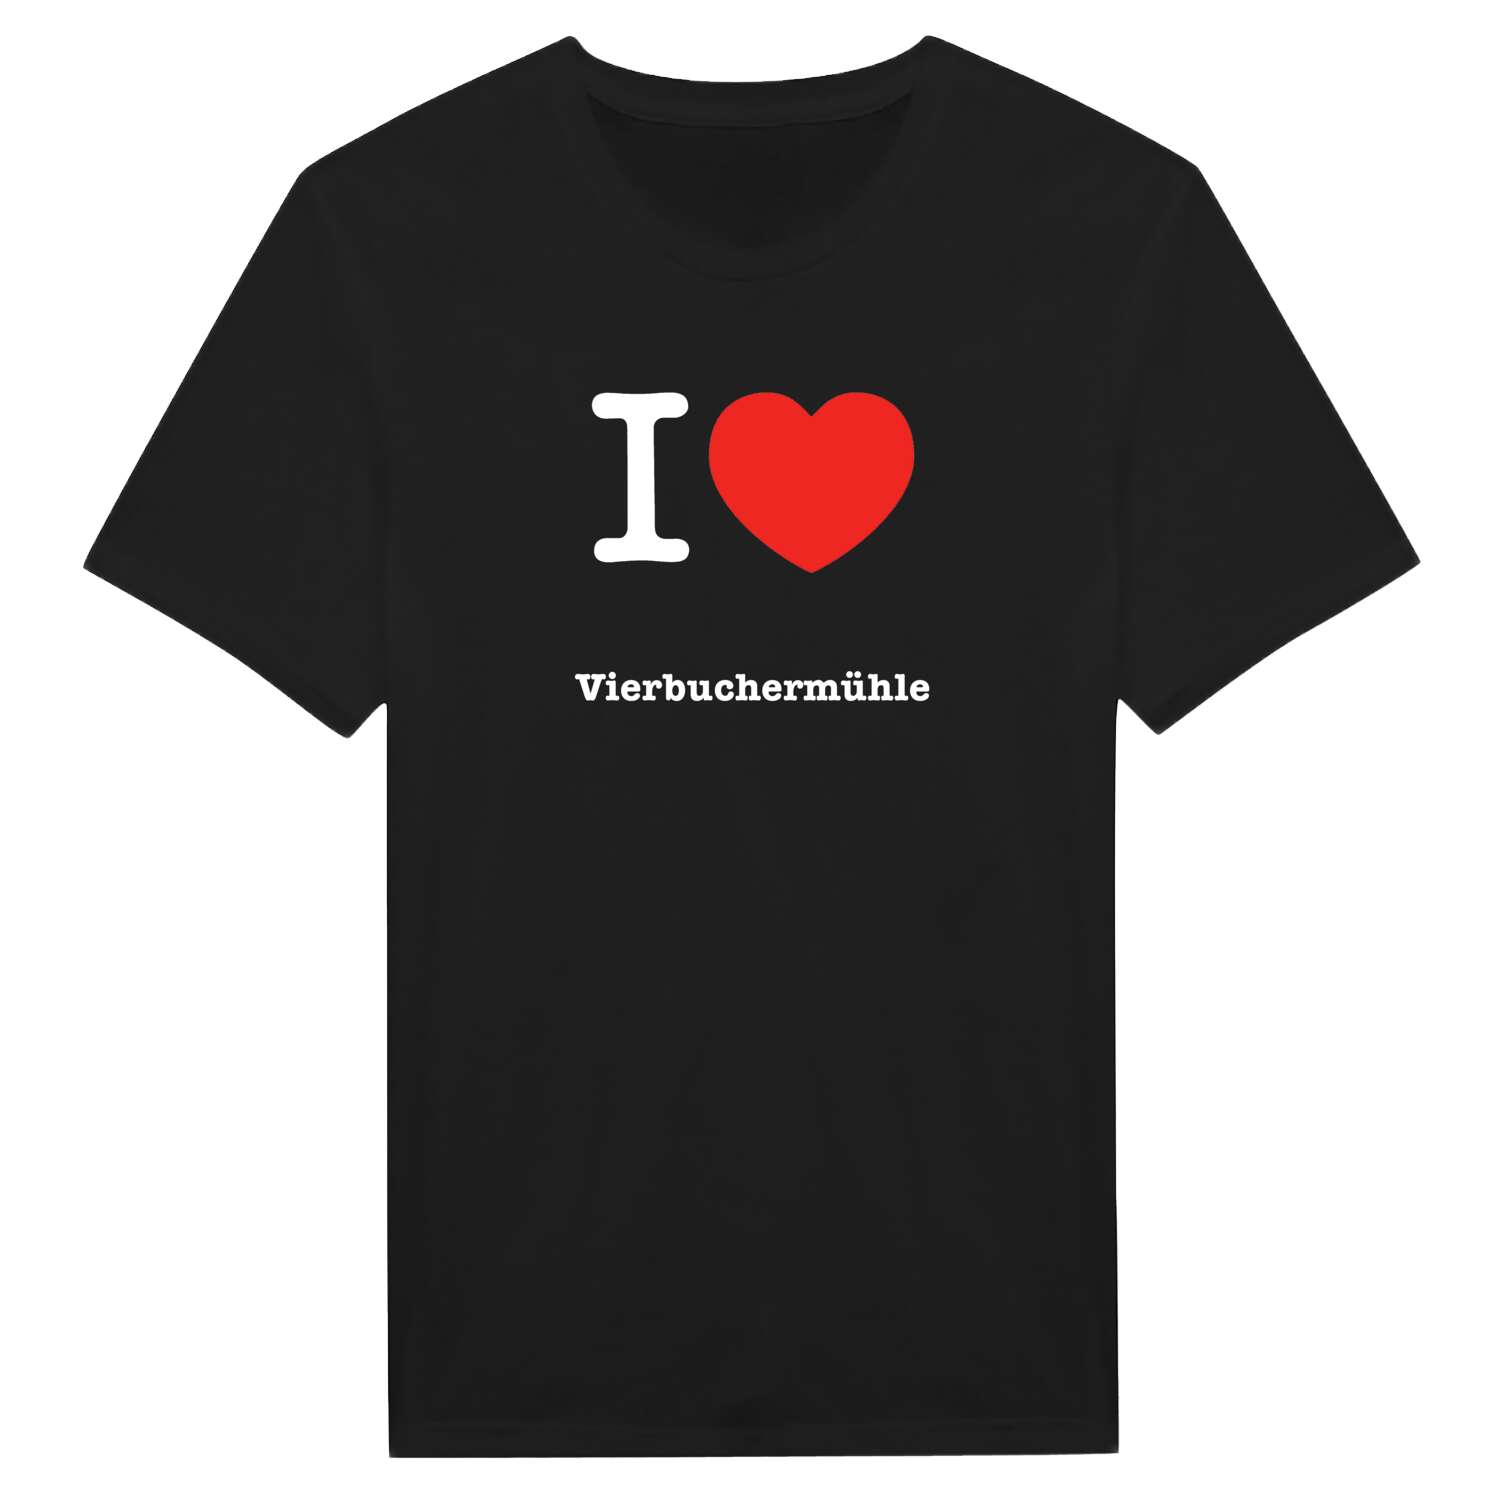 Vierbuchermühle T-Shirt »I love«